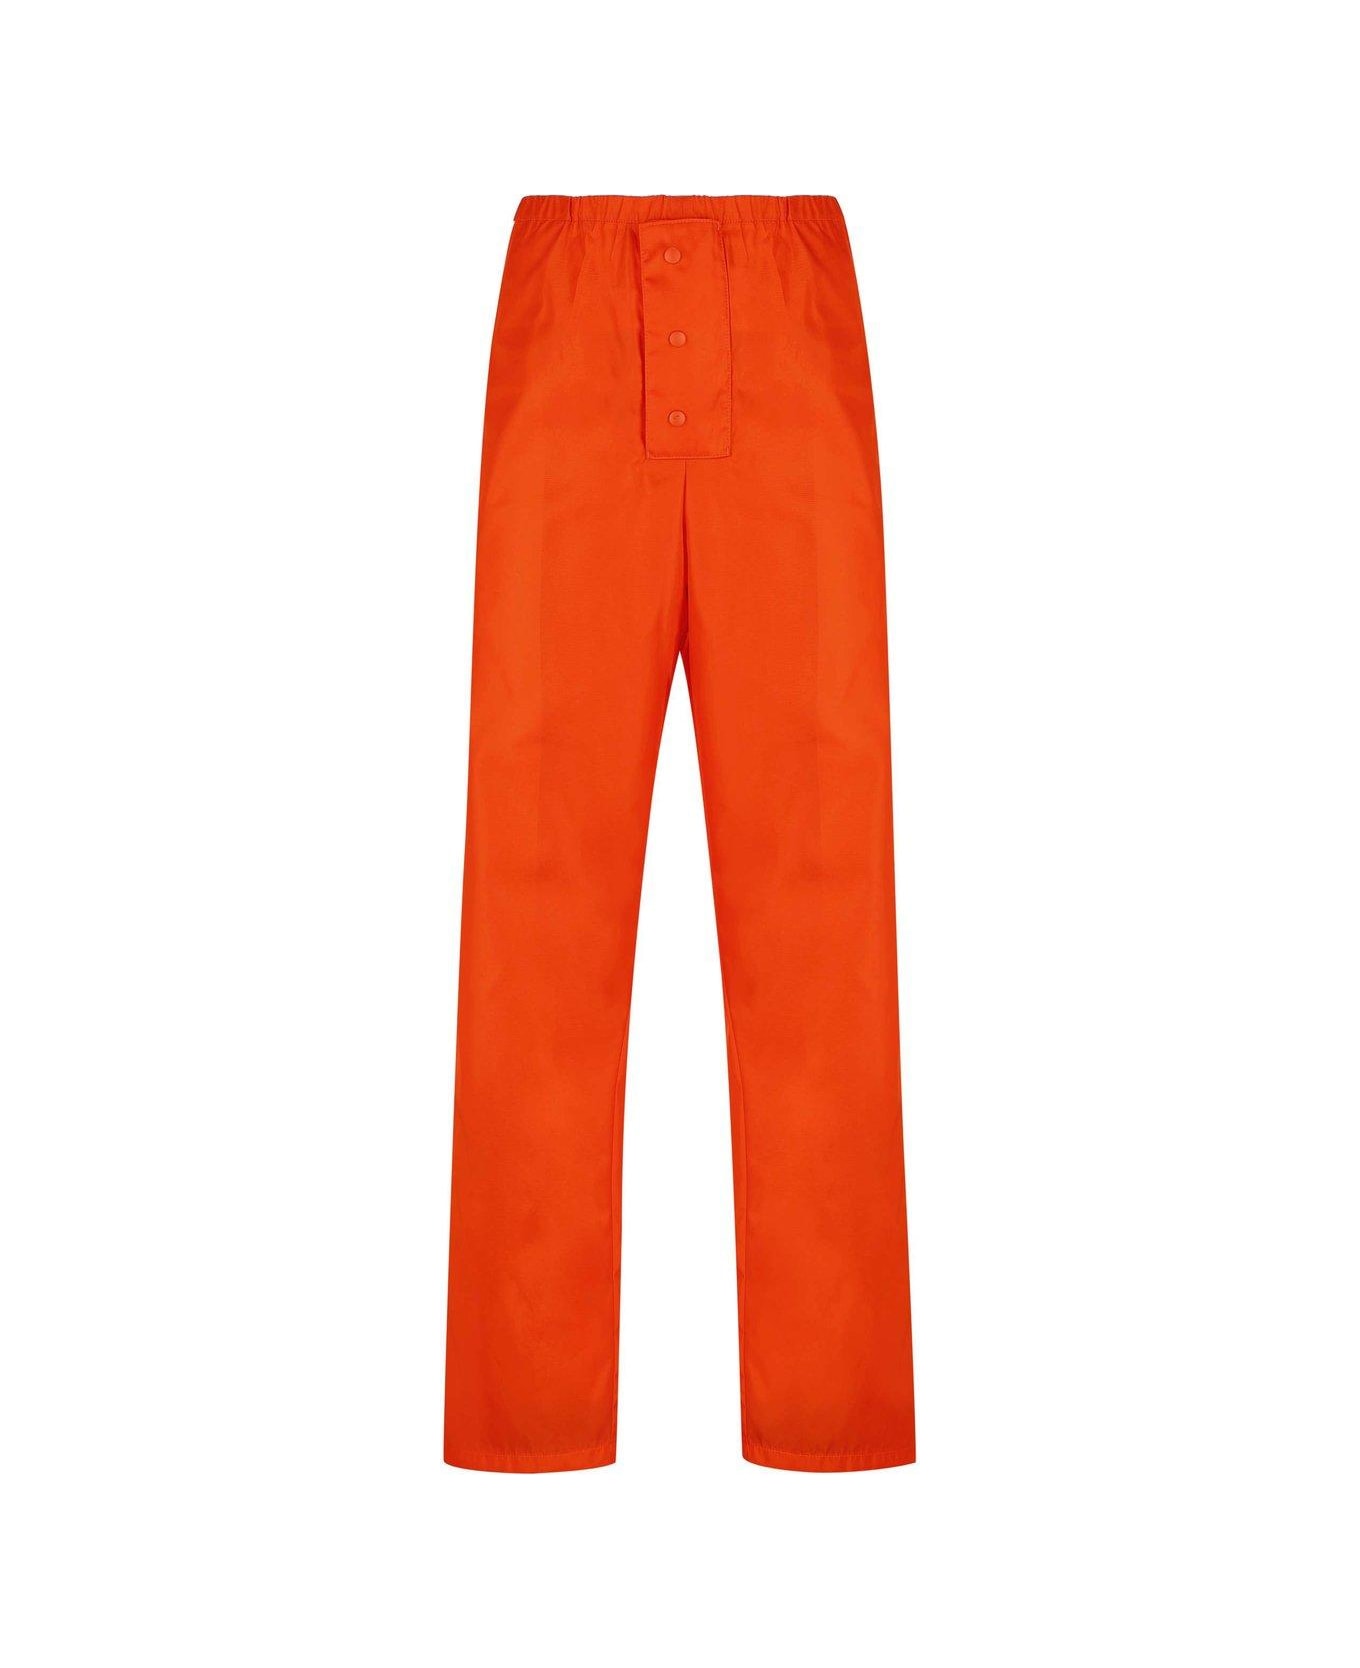 Prada High Waist Straight Leg Pants - Arancio ボトムス